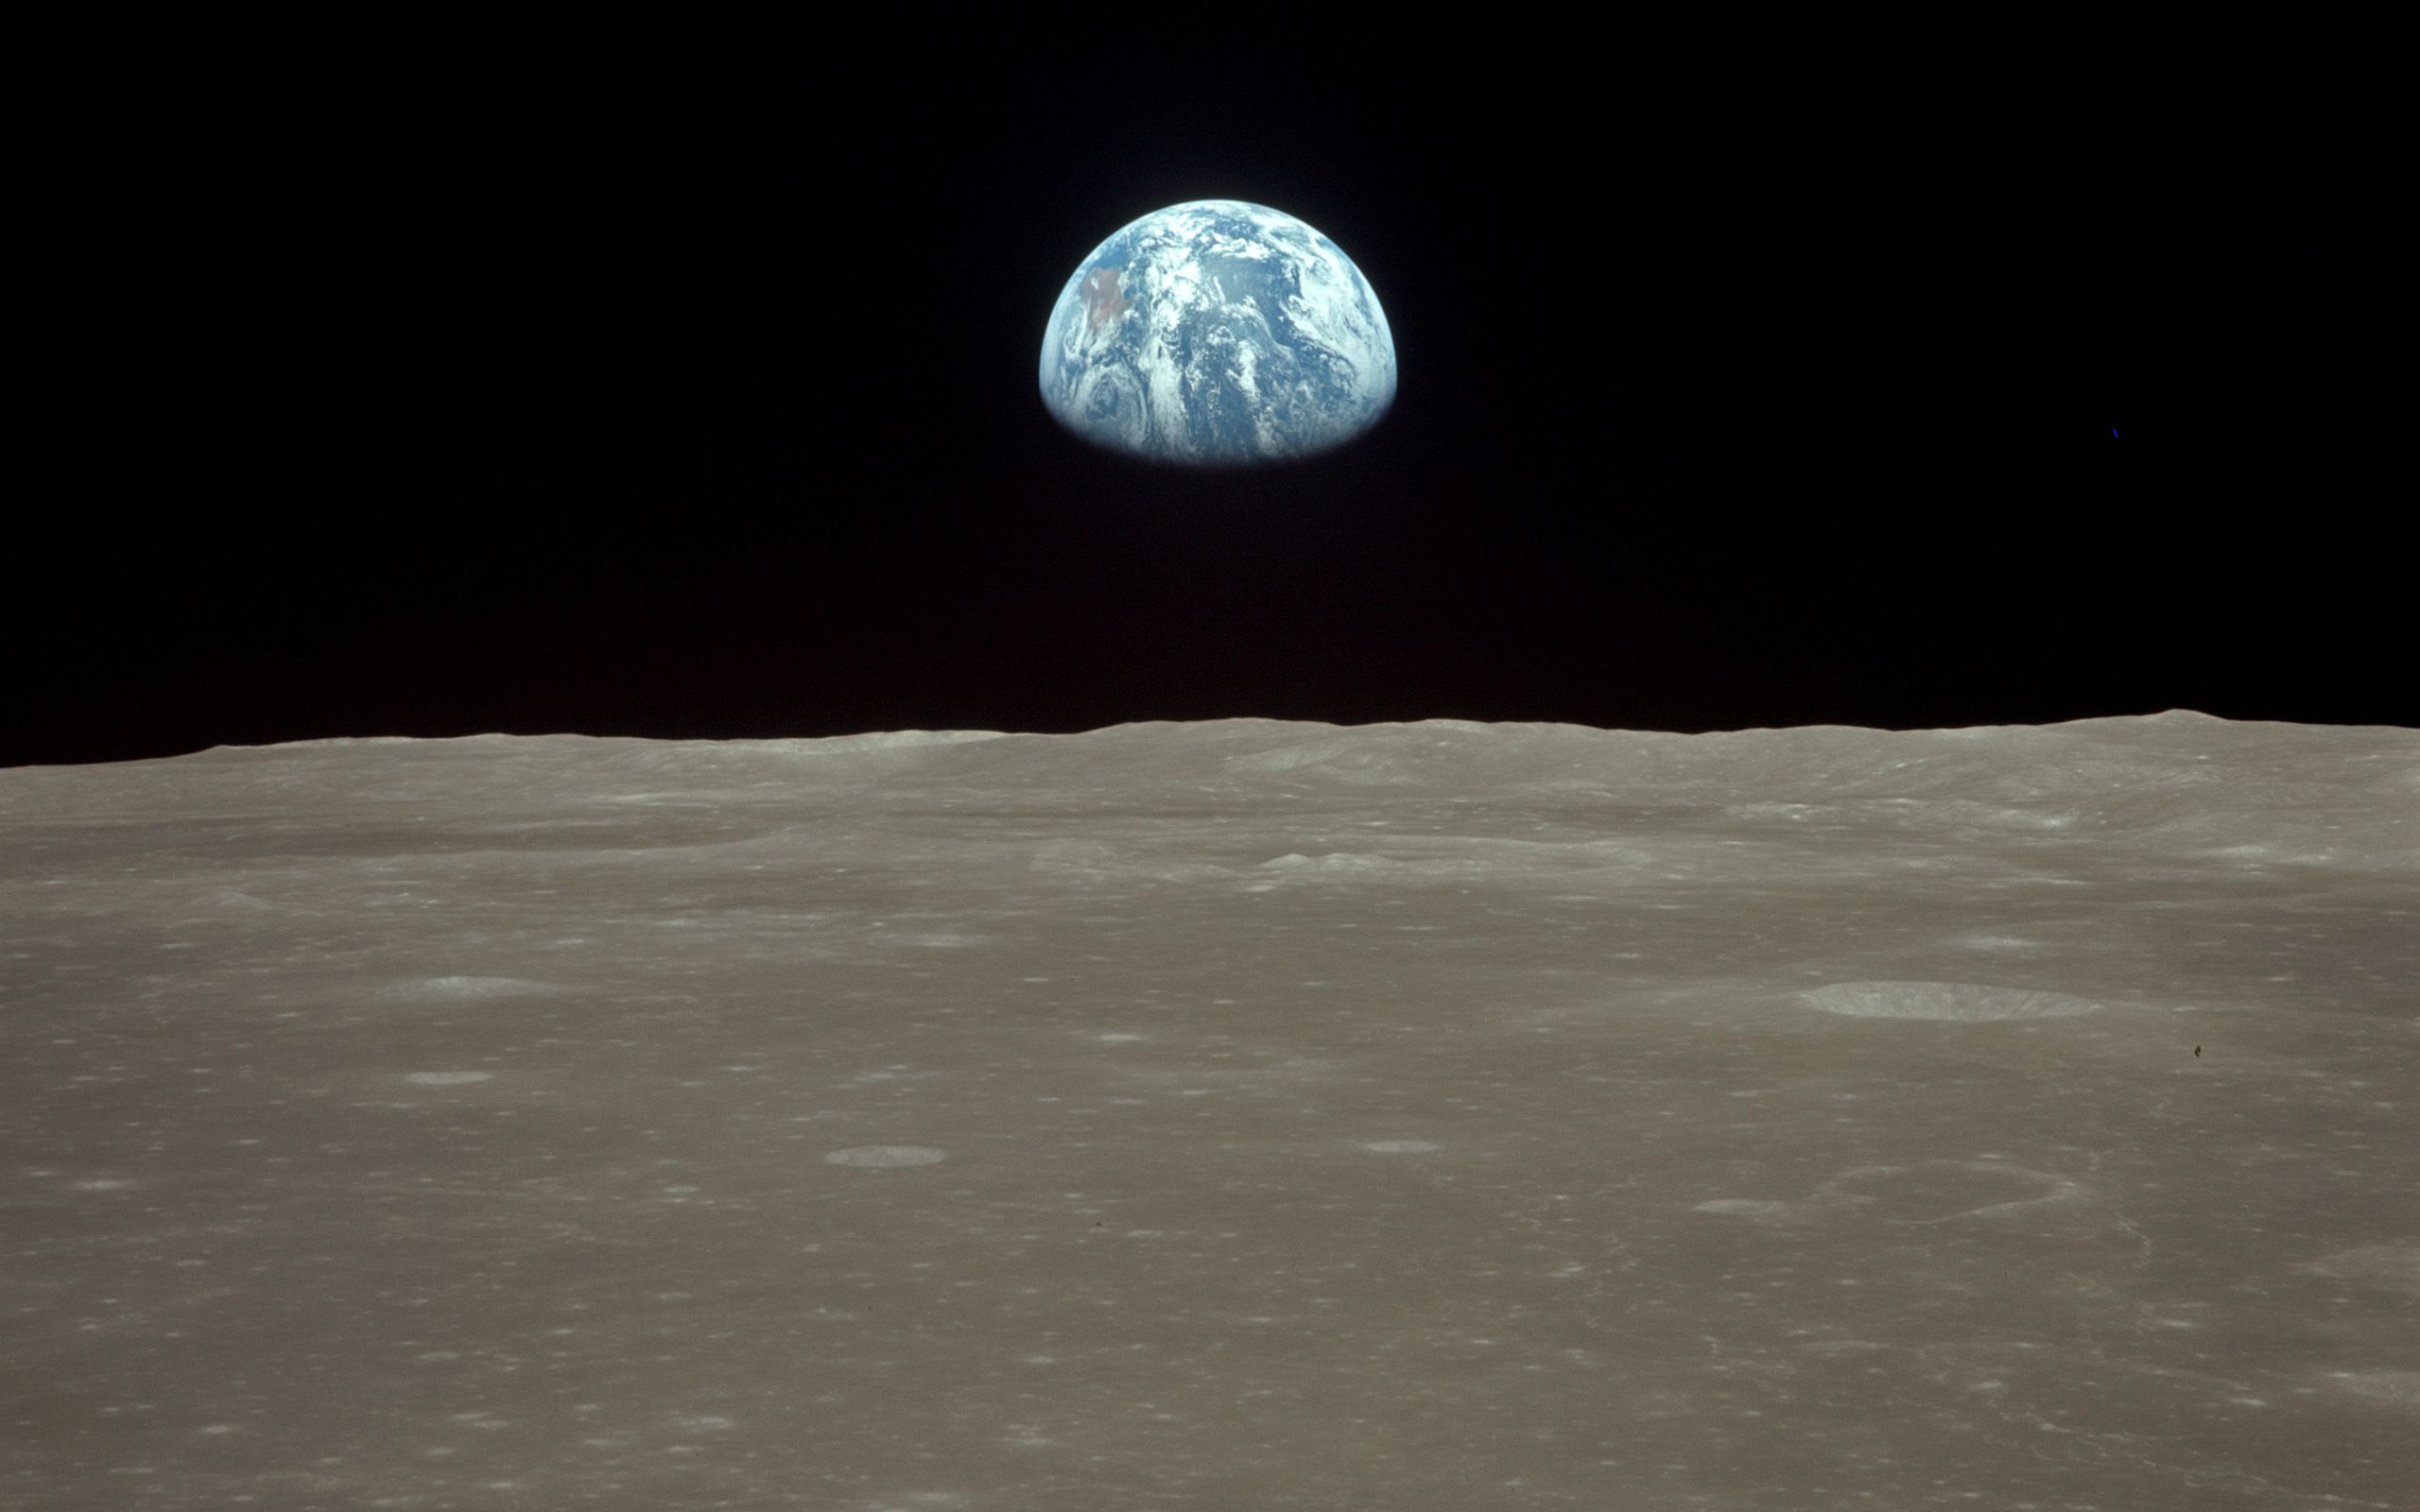 Wow Japans moon probe updates Earthrise